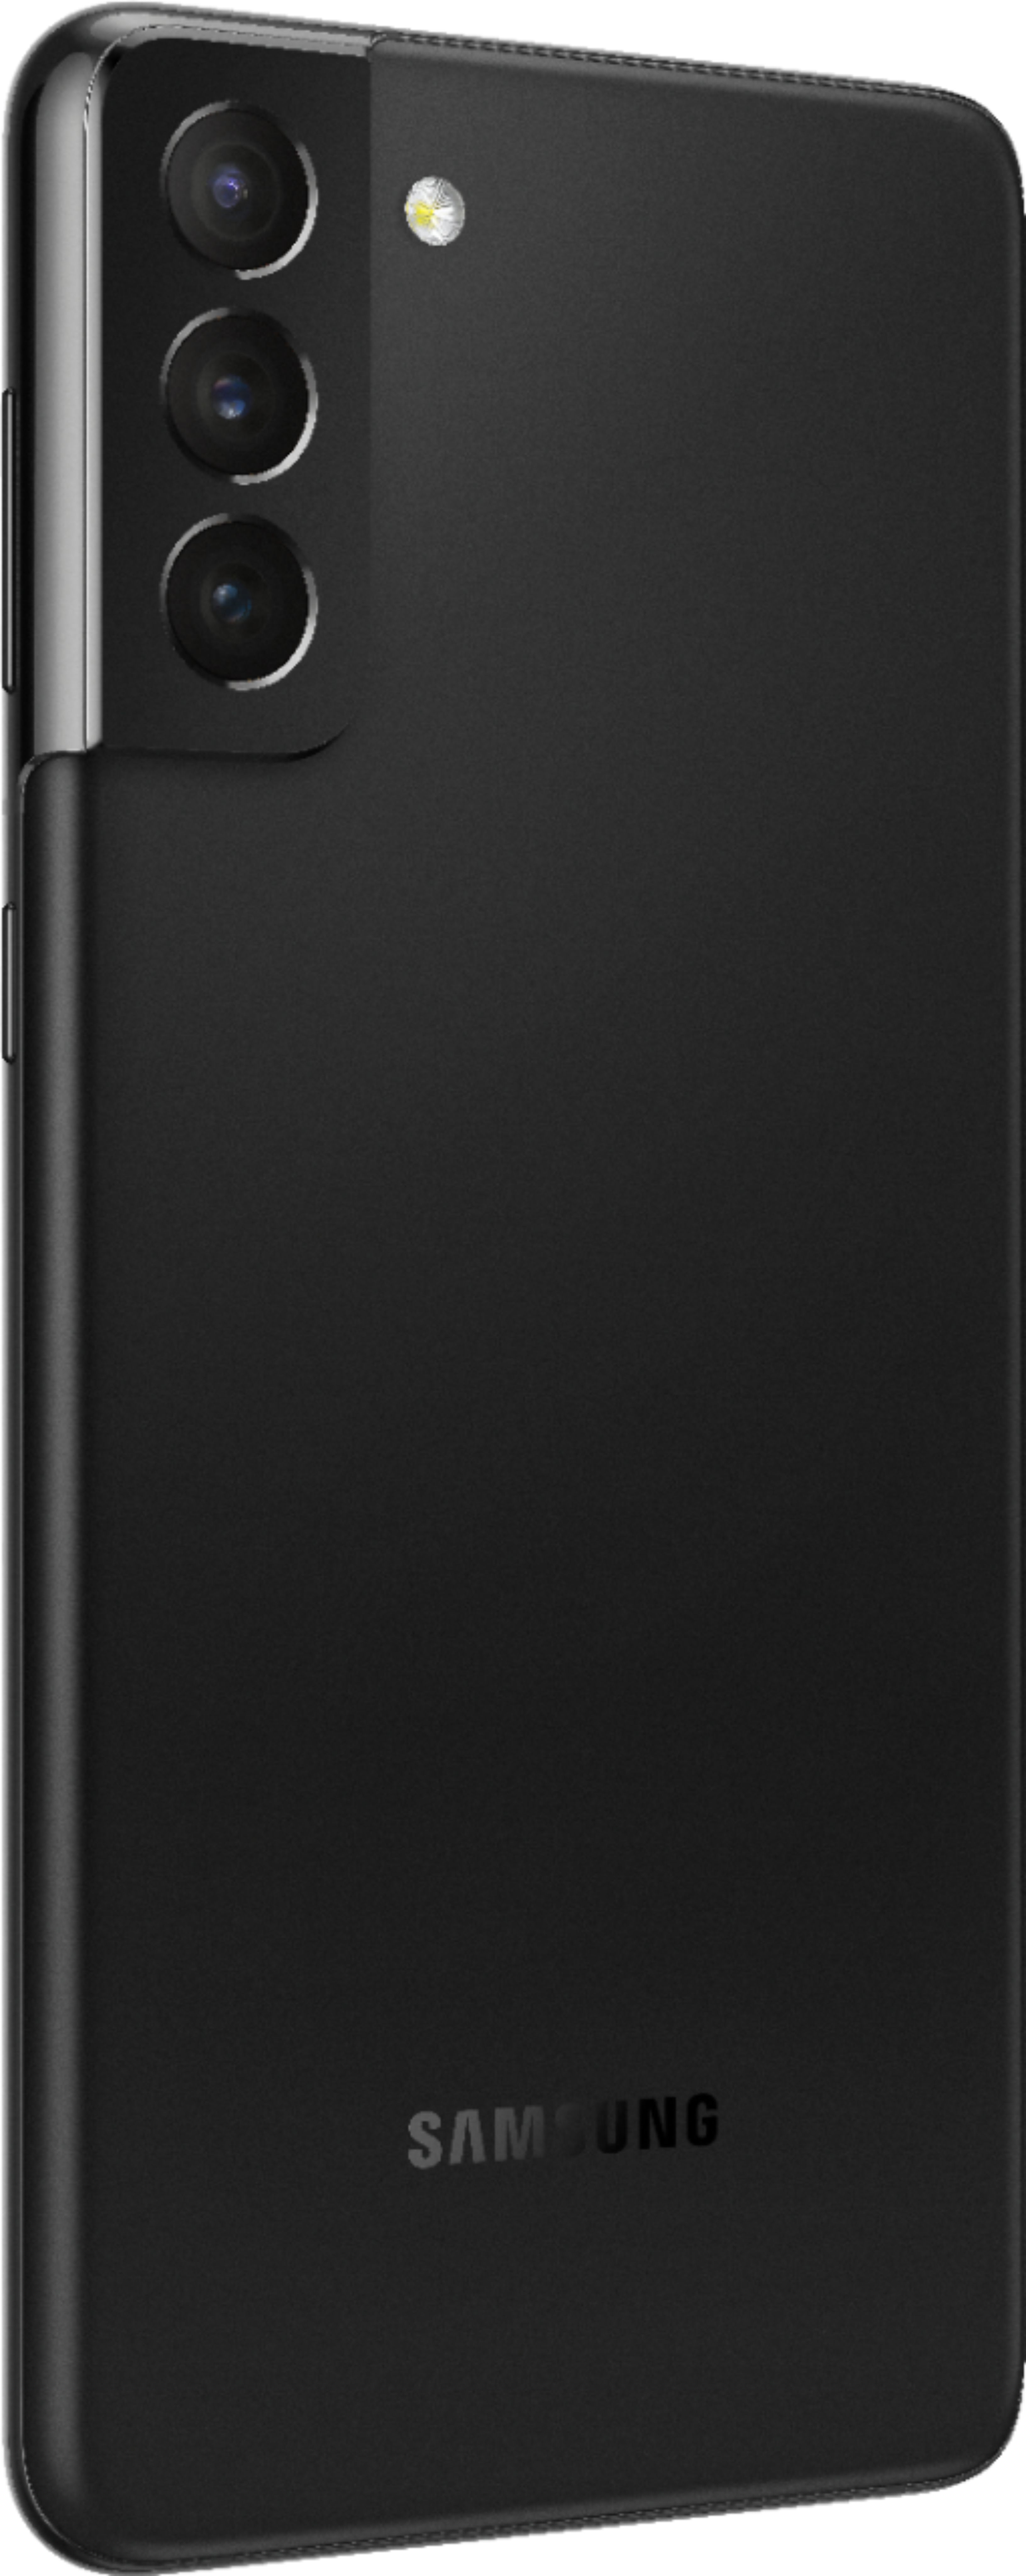 Samsung Galaxy S21+ 5G - 128 GB - Phantom Black - Unlocked